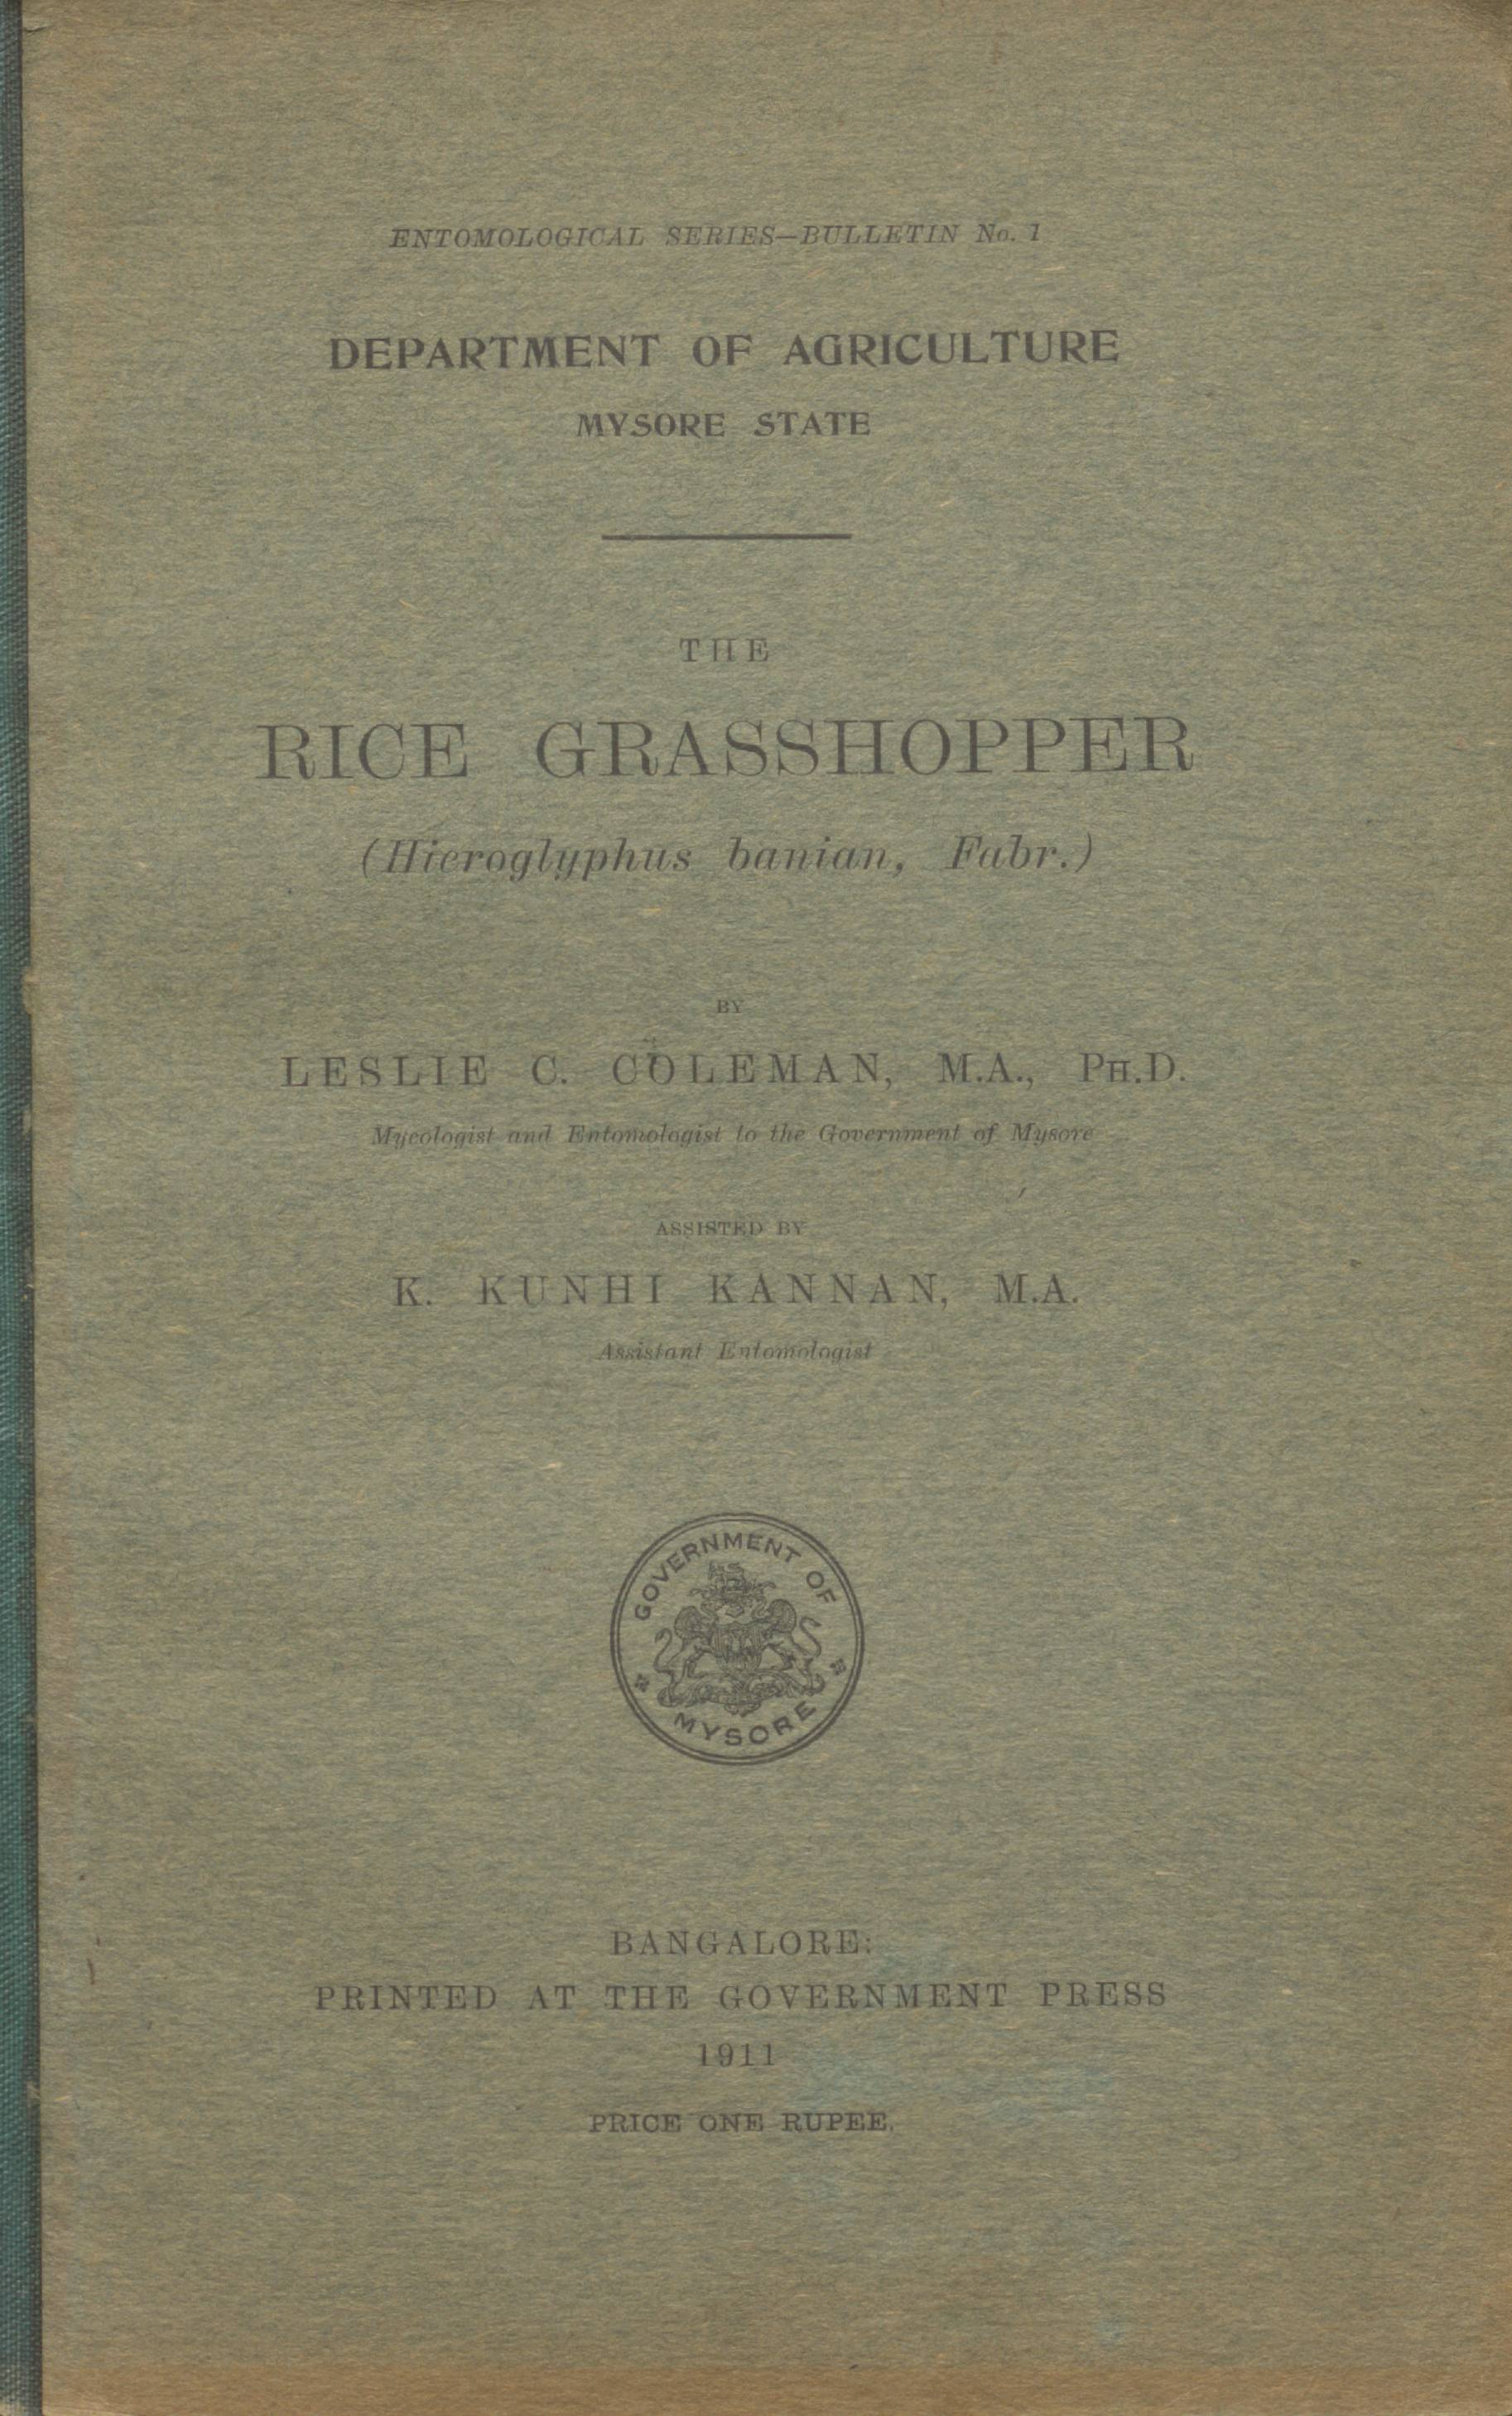 The Rice Grasshopper (Hieroglyphus banian, Fabr.)